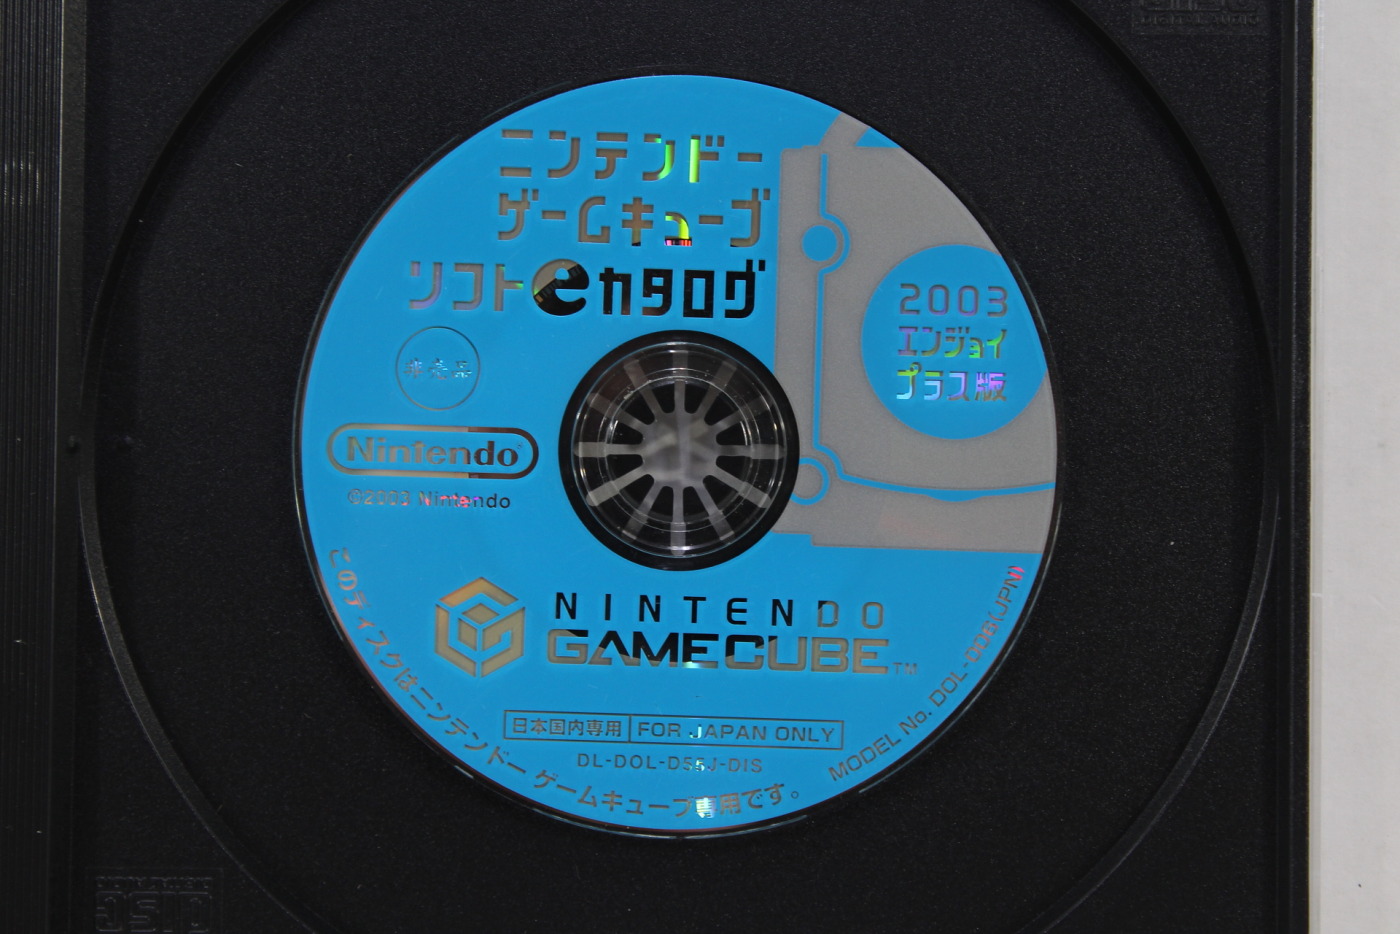 Zelda Ocarina Of Time Nintendo GameCube Game For Sale